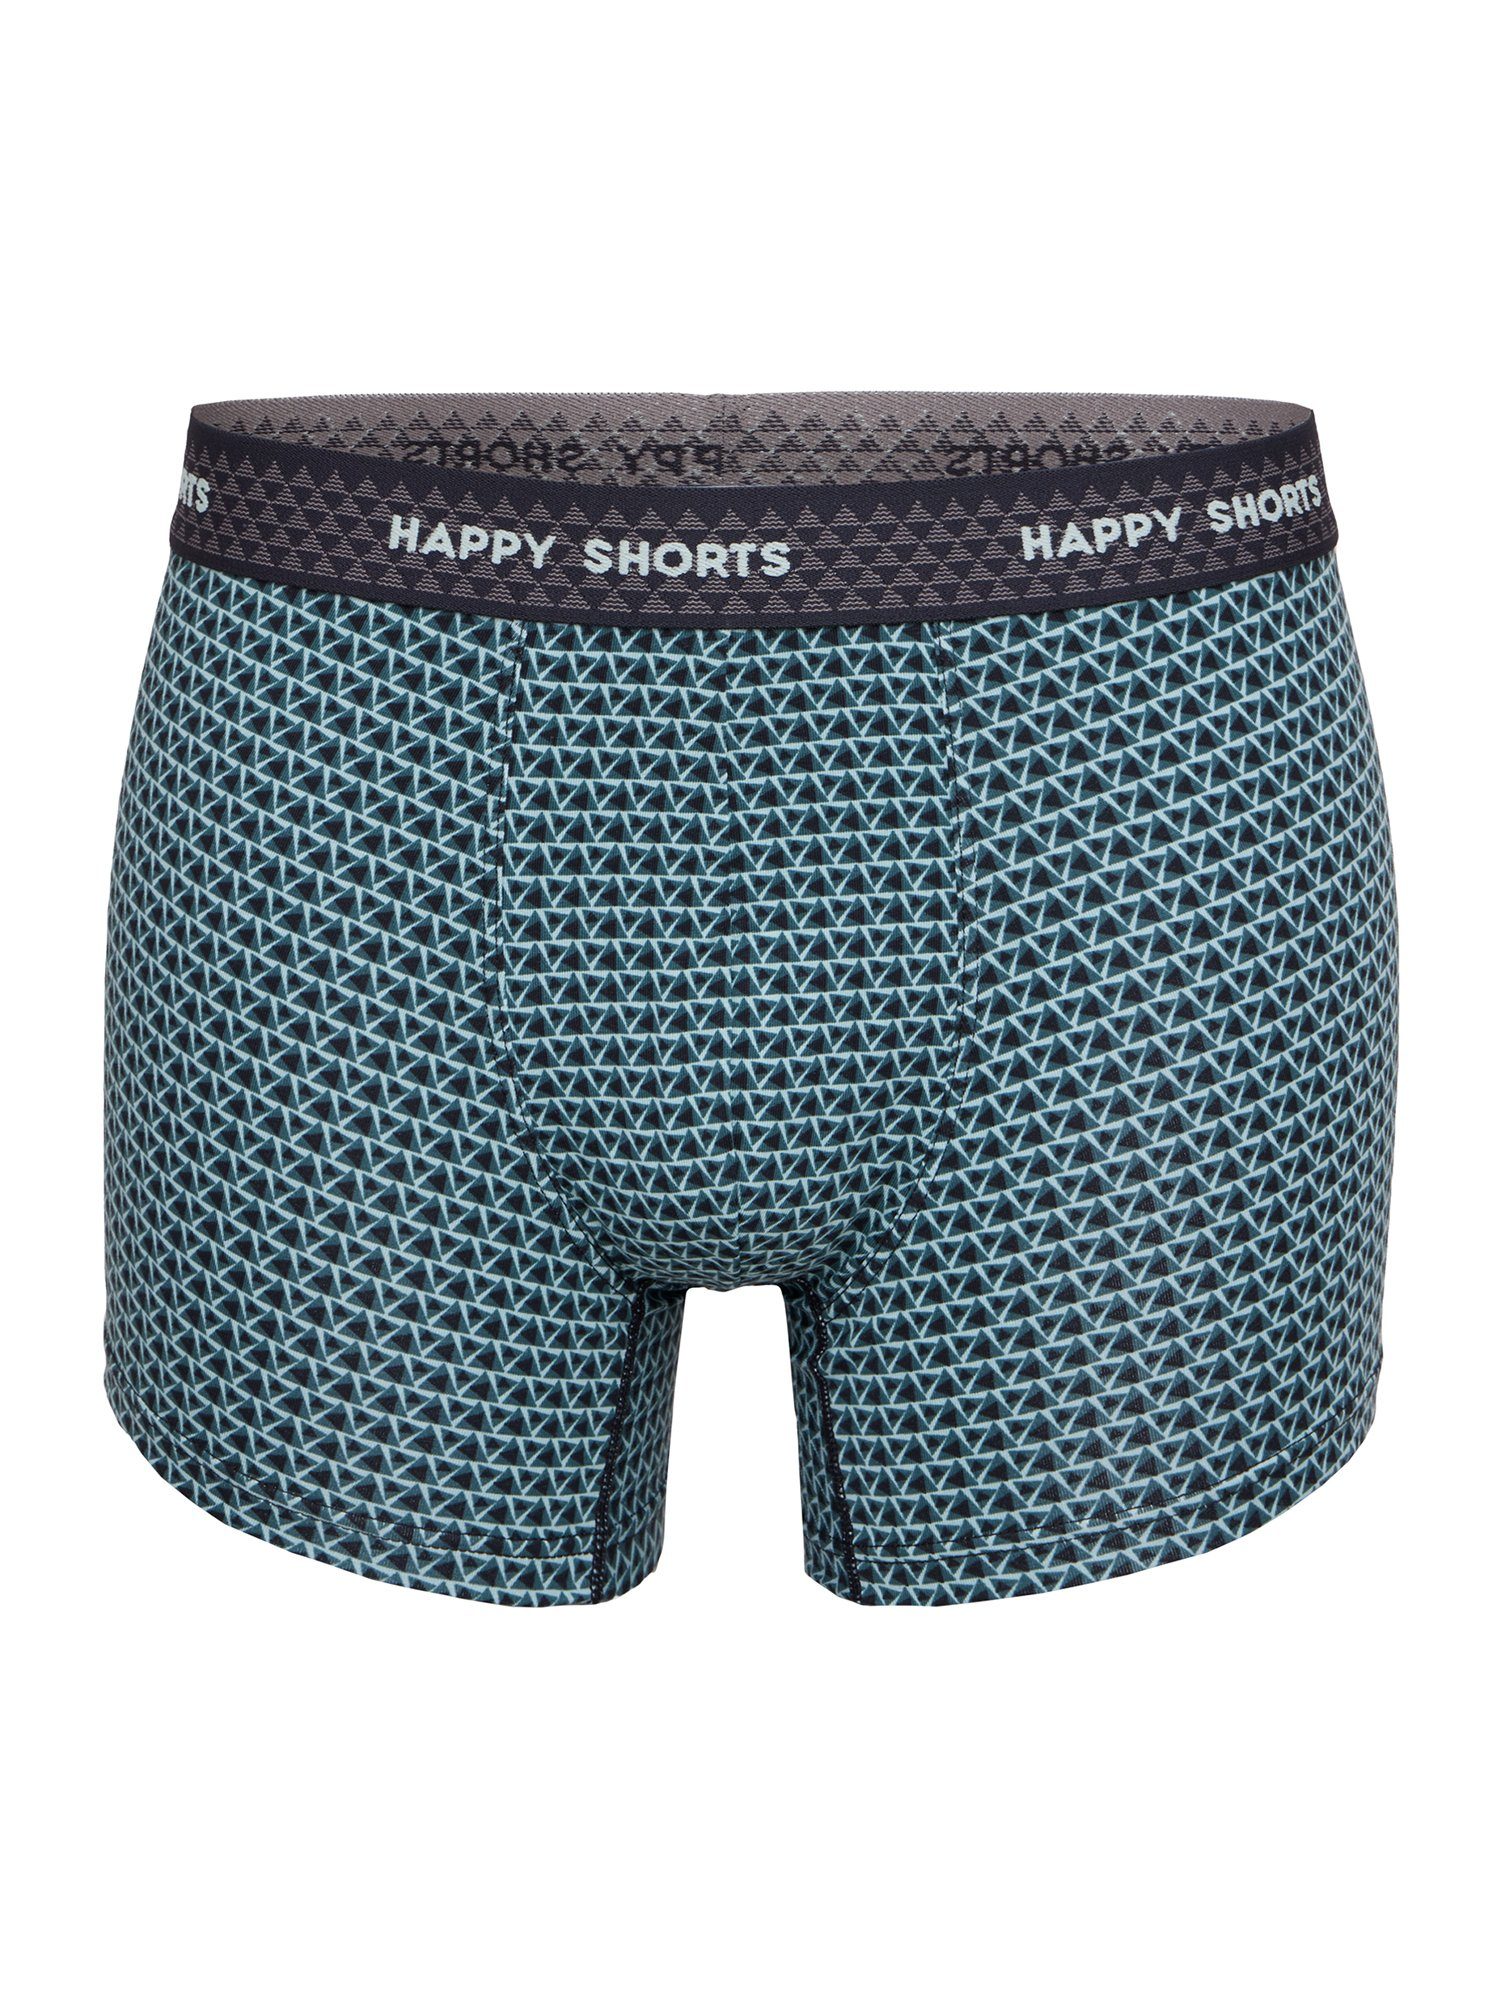 SHORTS Trunks (2-St) Retro HAPPY Mint Retro-shorts Triangles Pants Dusty unterhose Retro-Boxer